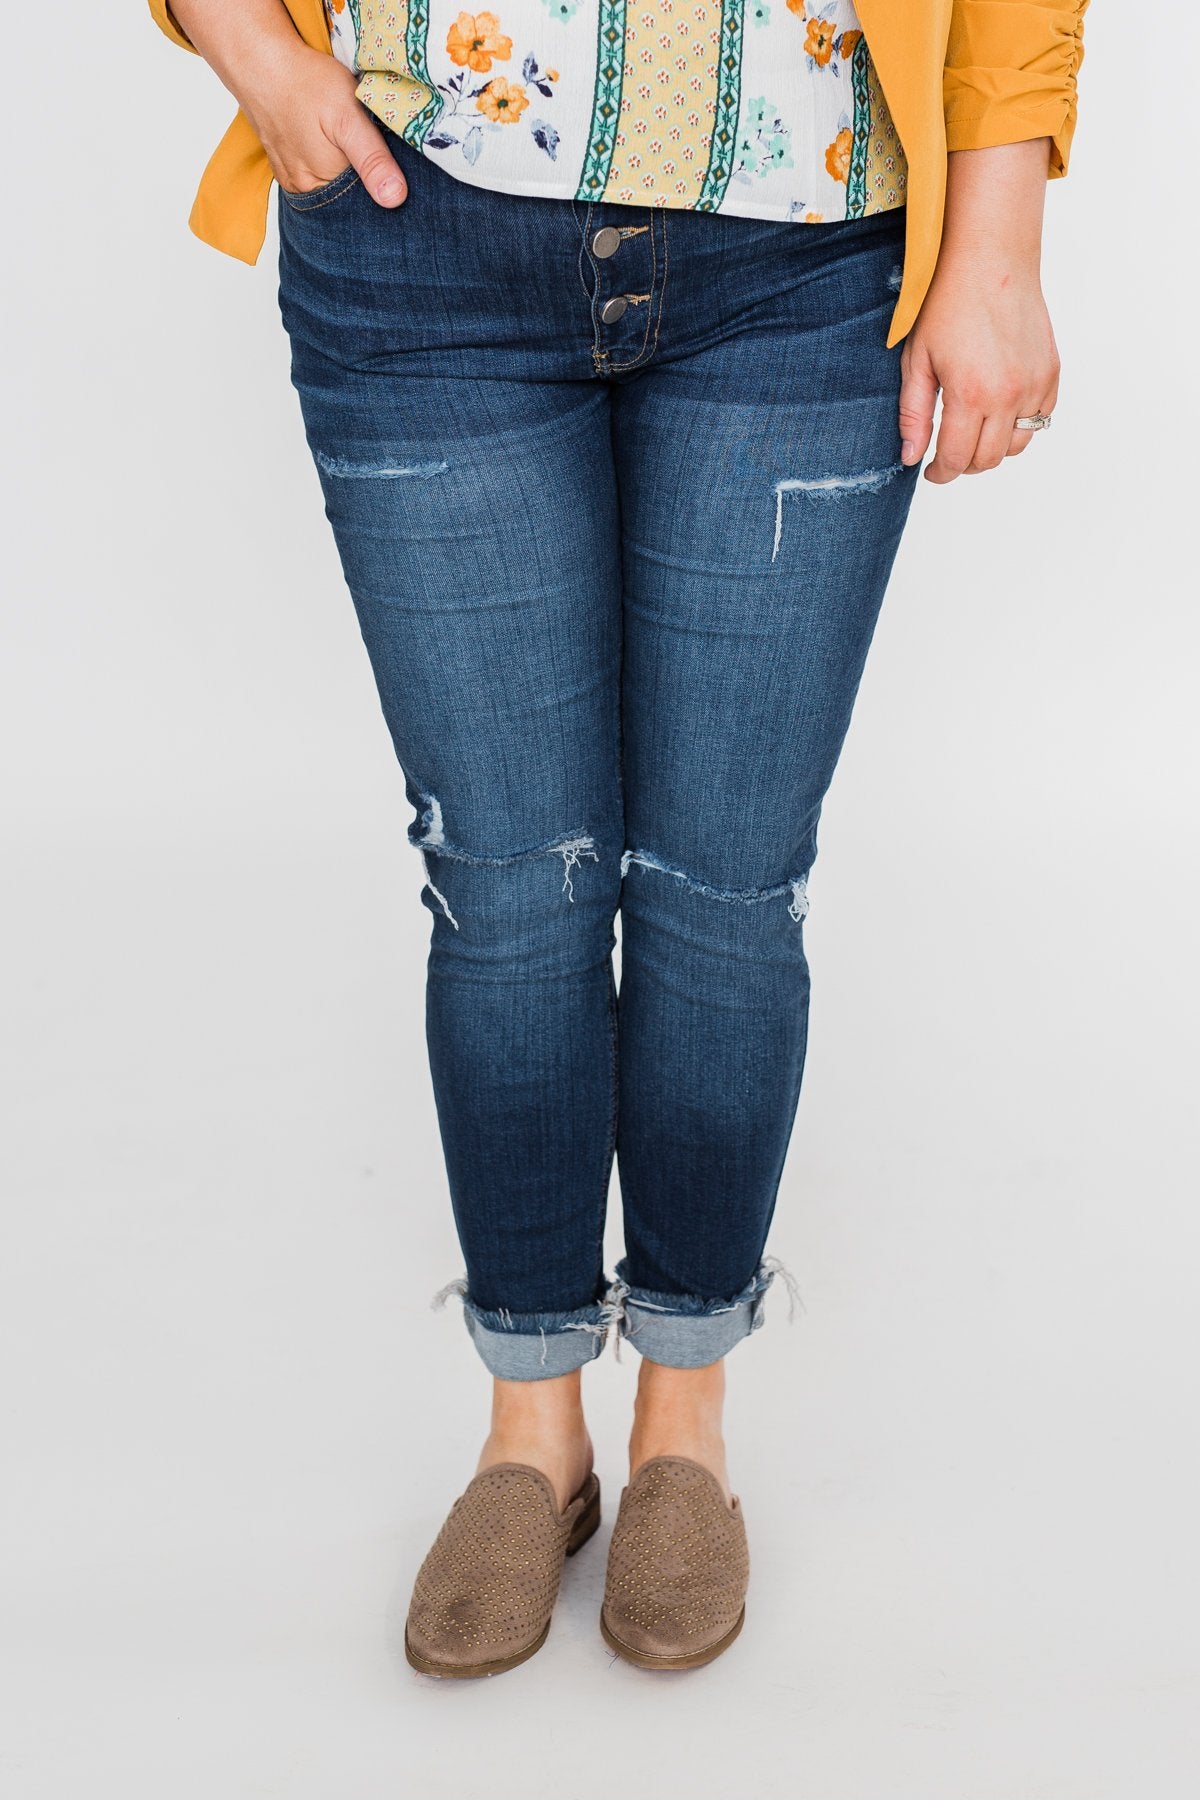 C'est Toi Distressed Skinny Jeans- Jade Wash